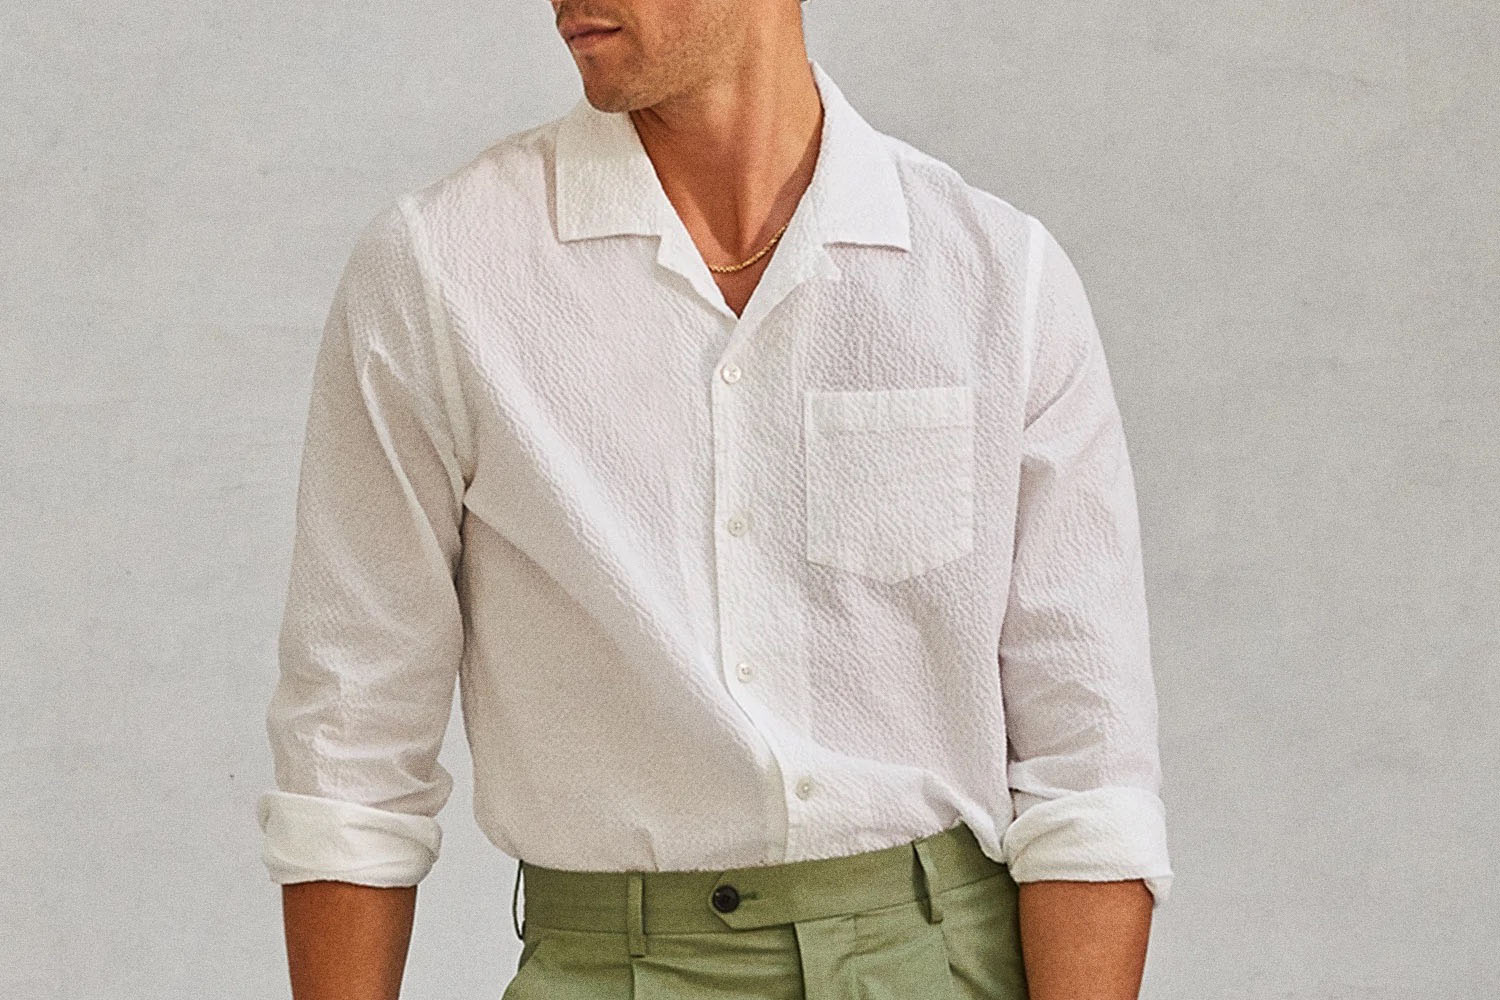 A model in a Todd Snyder Portuguese Seersucker shirt